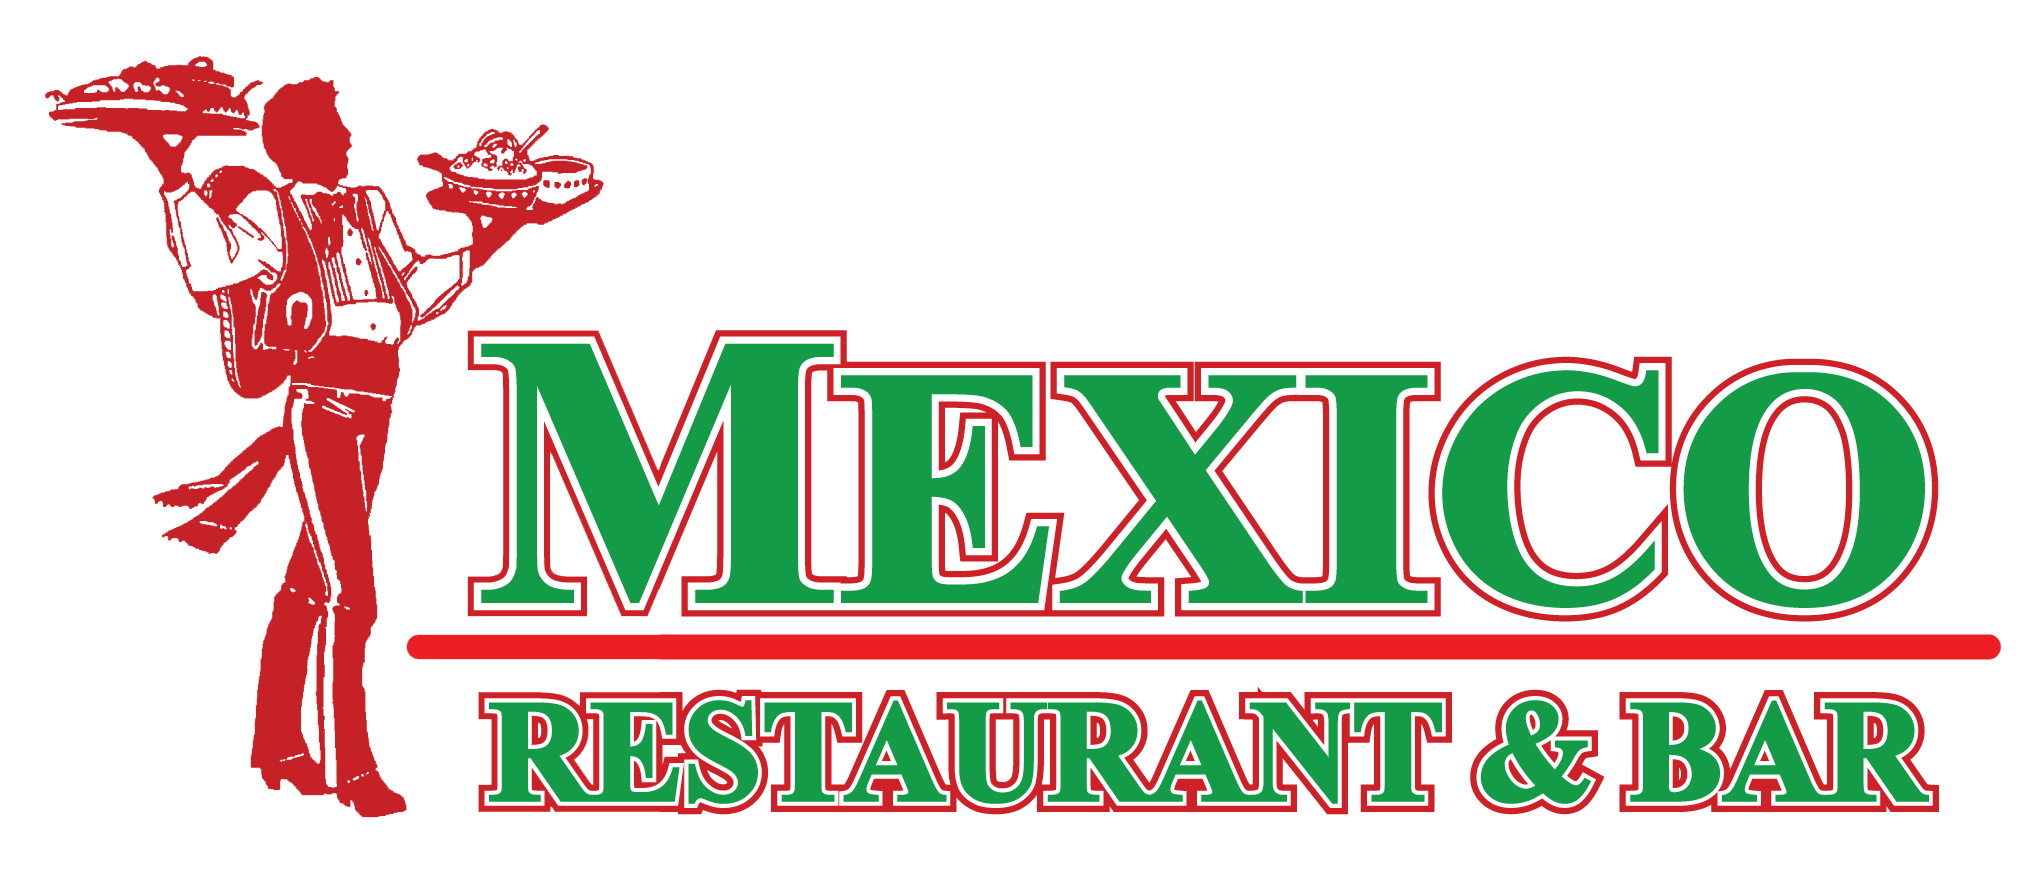 Red Restaurants Logo - Red and green restaurant Logos